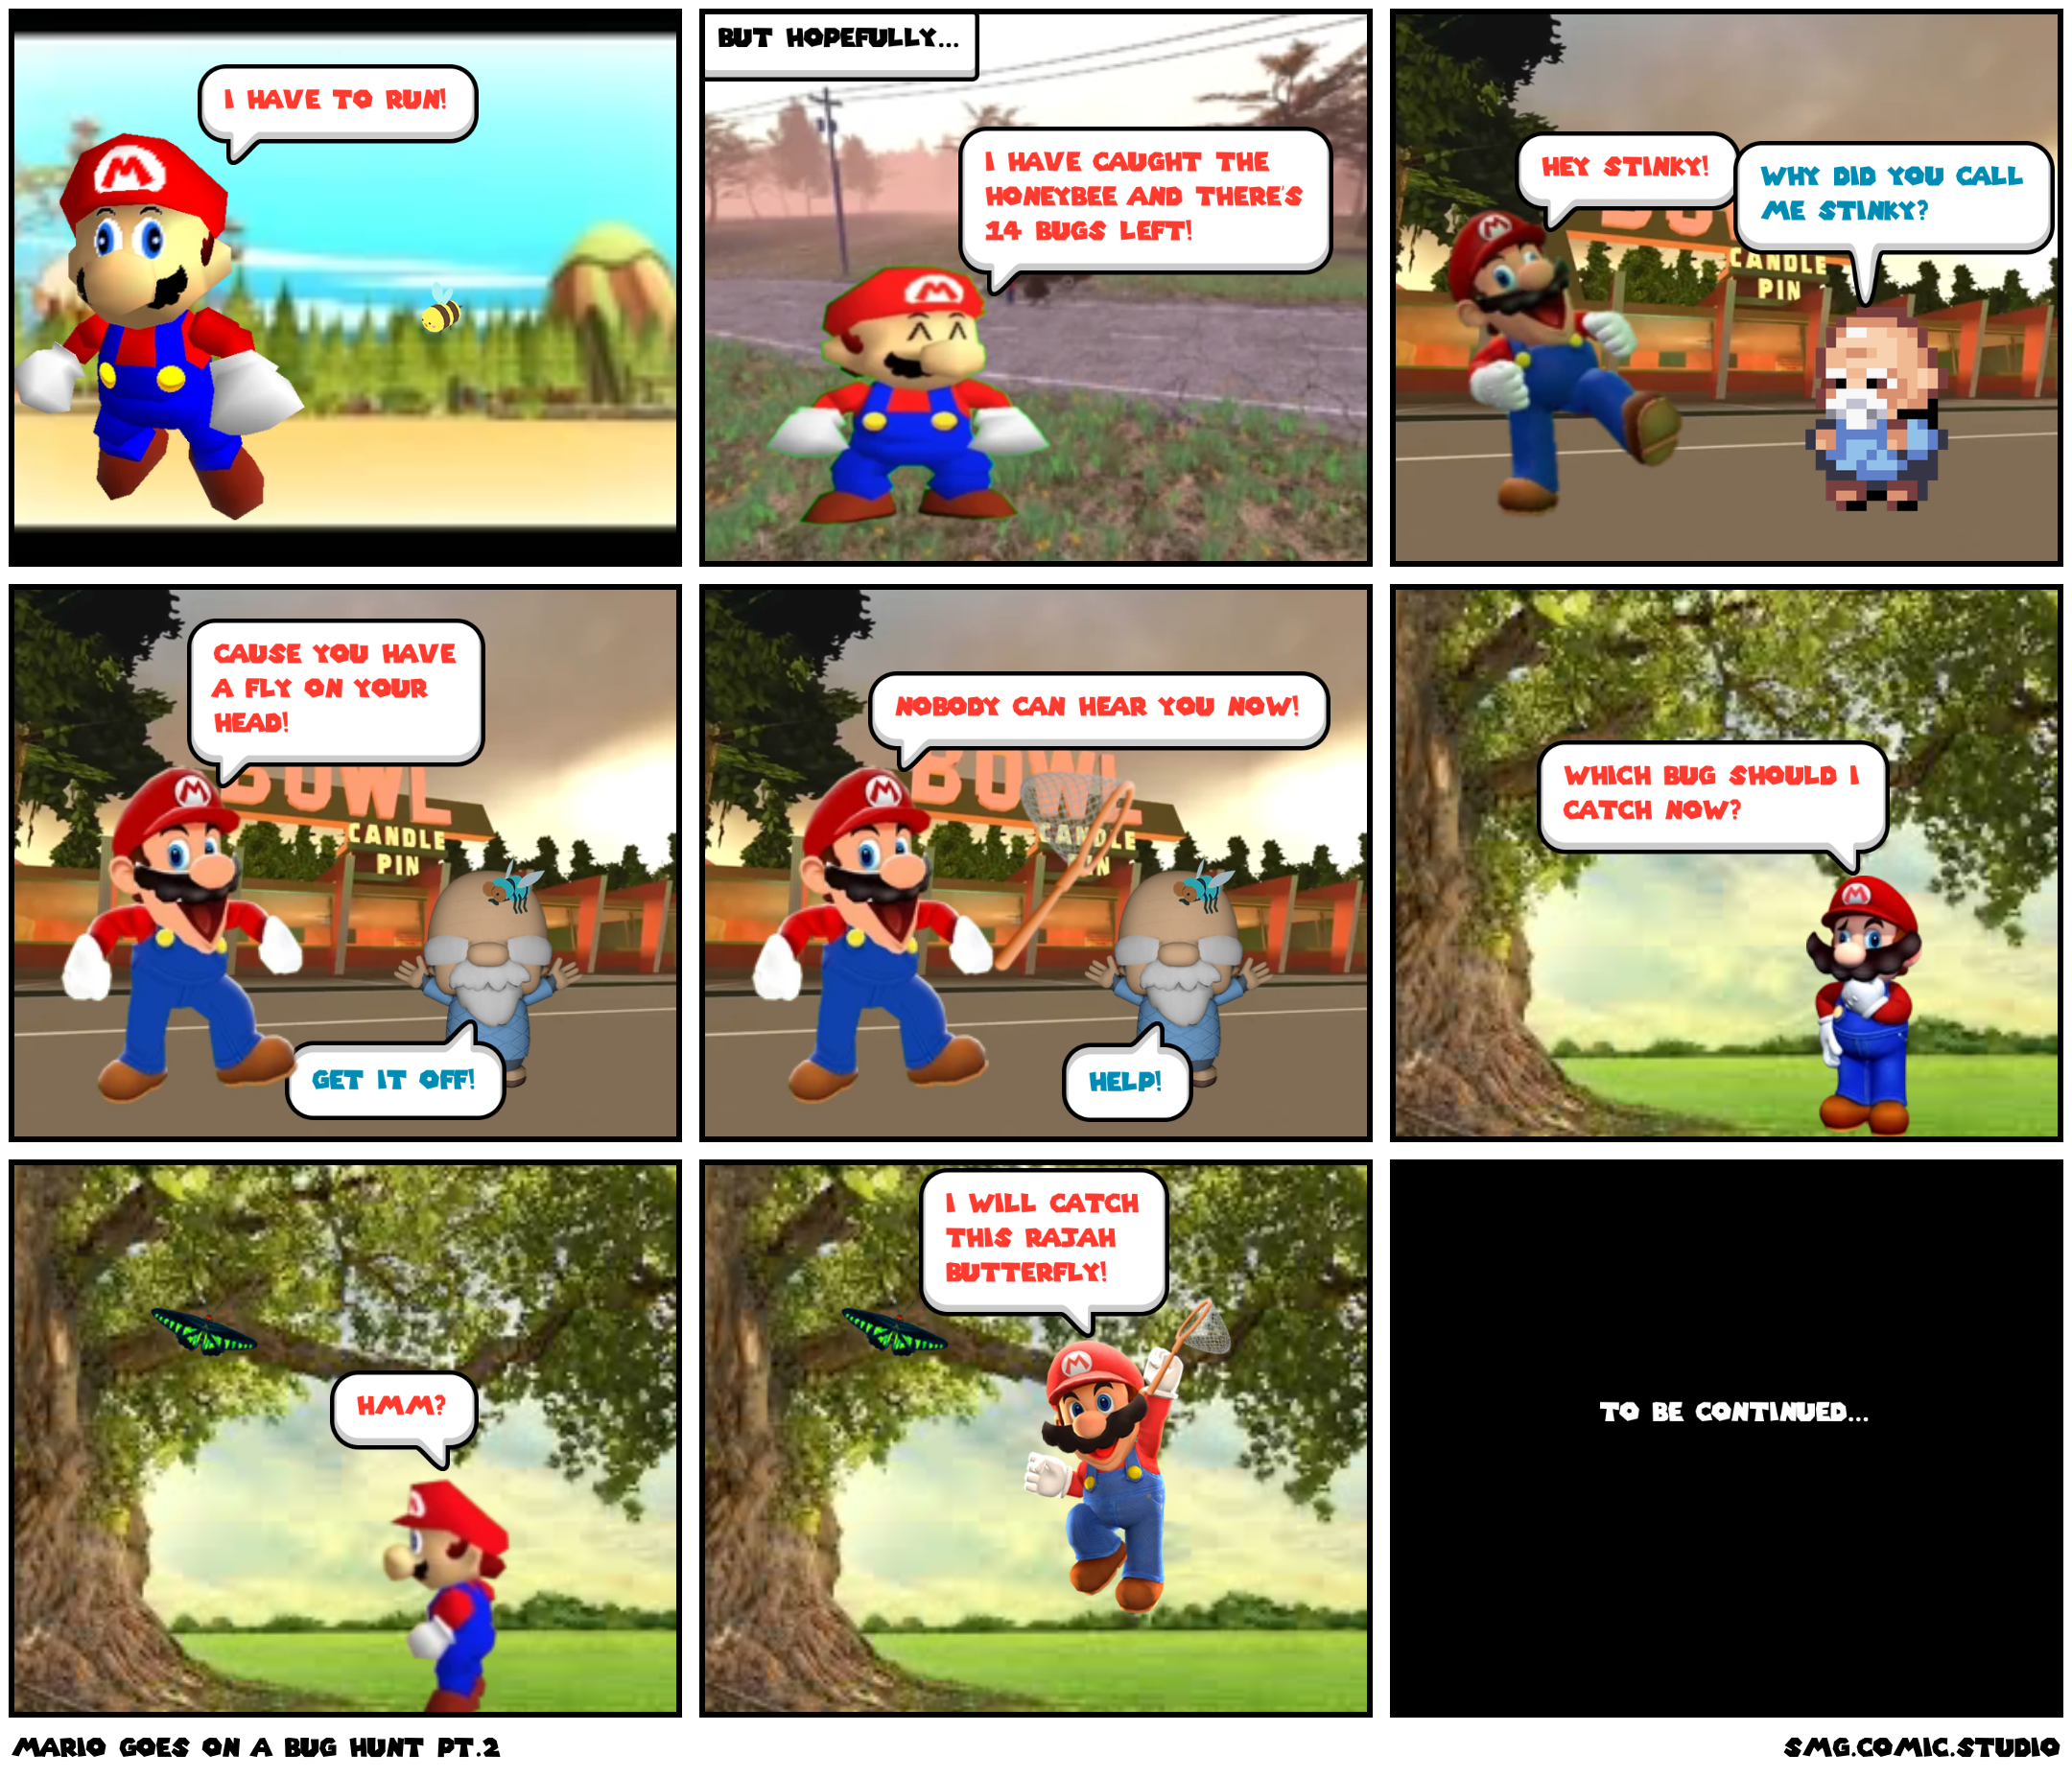 Mario goes on a bug hunt pt.2